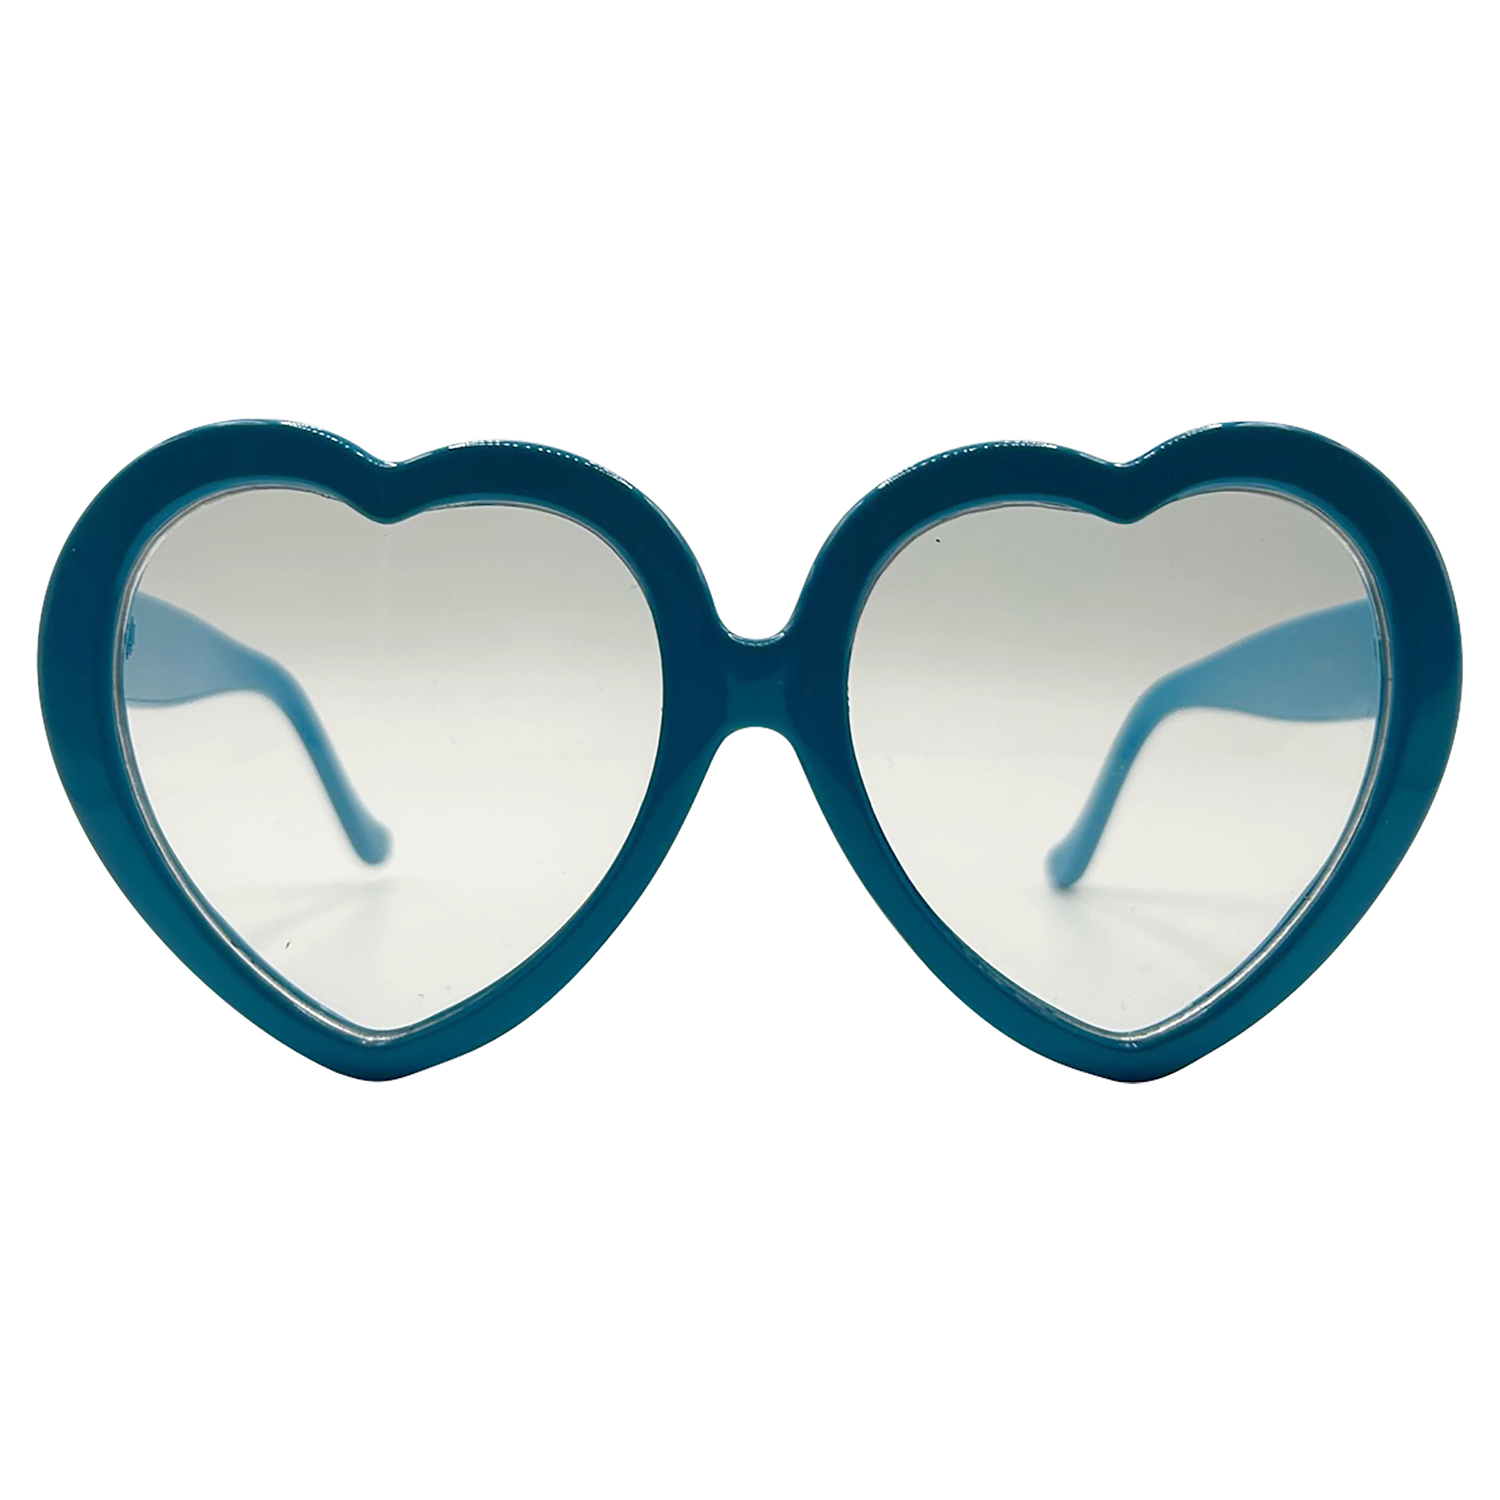 Heart Shaped Glasses PNG Transparent